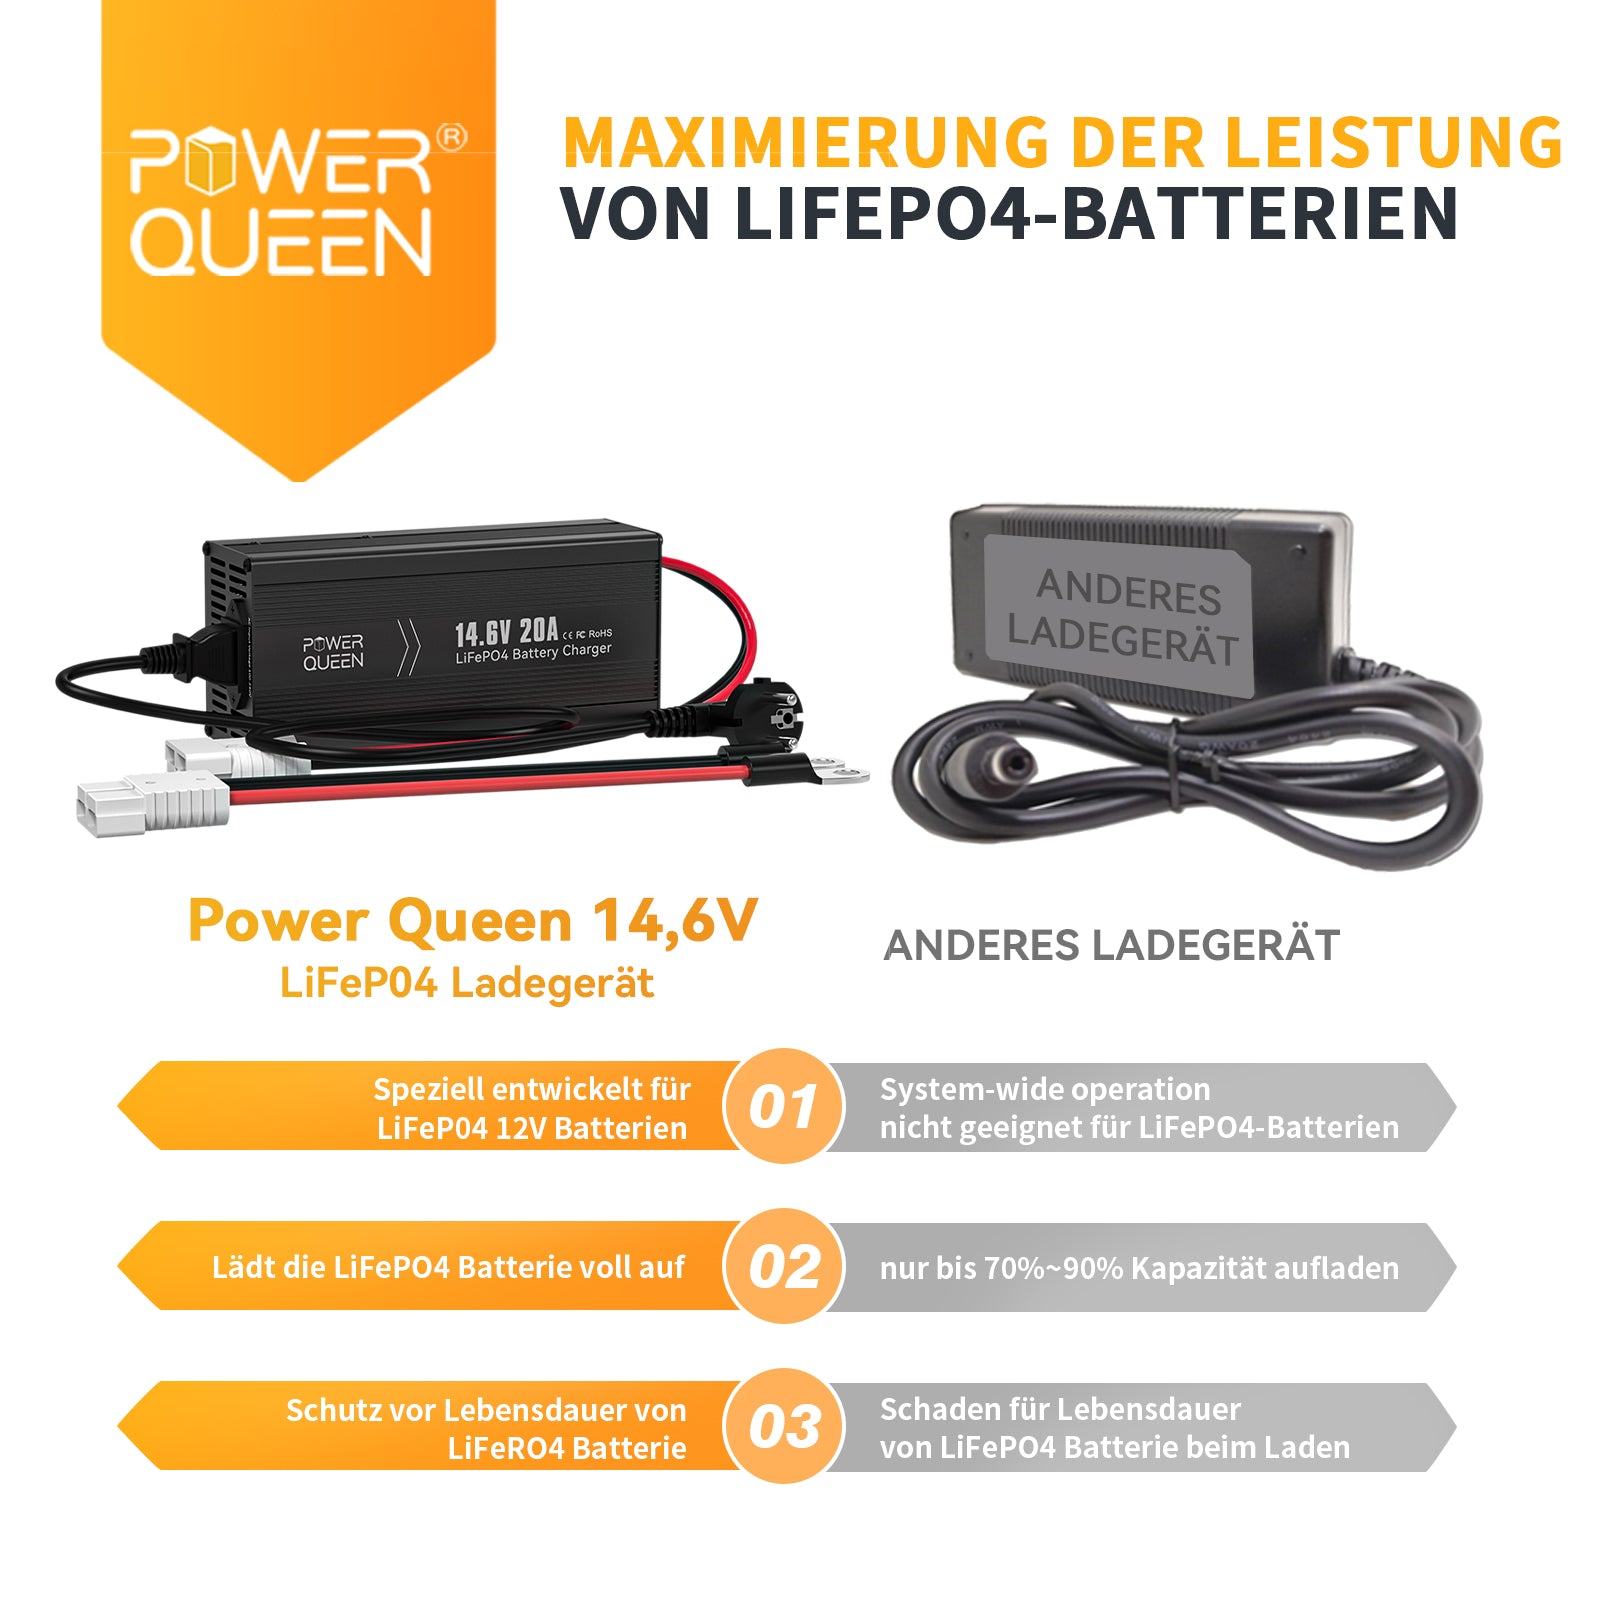 Power Queen 14,6V 20A LiFePO4 Ladegerät